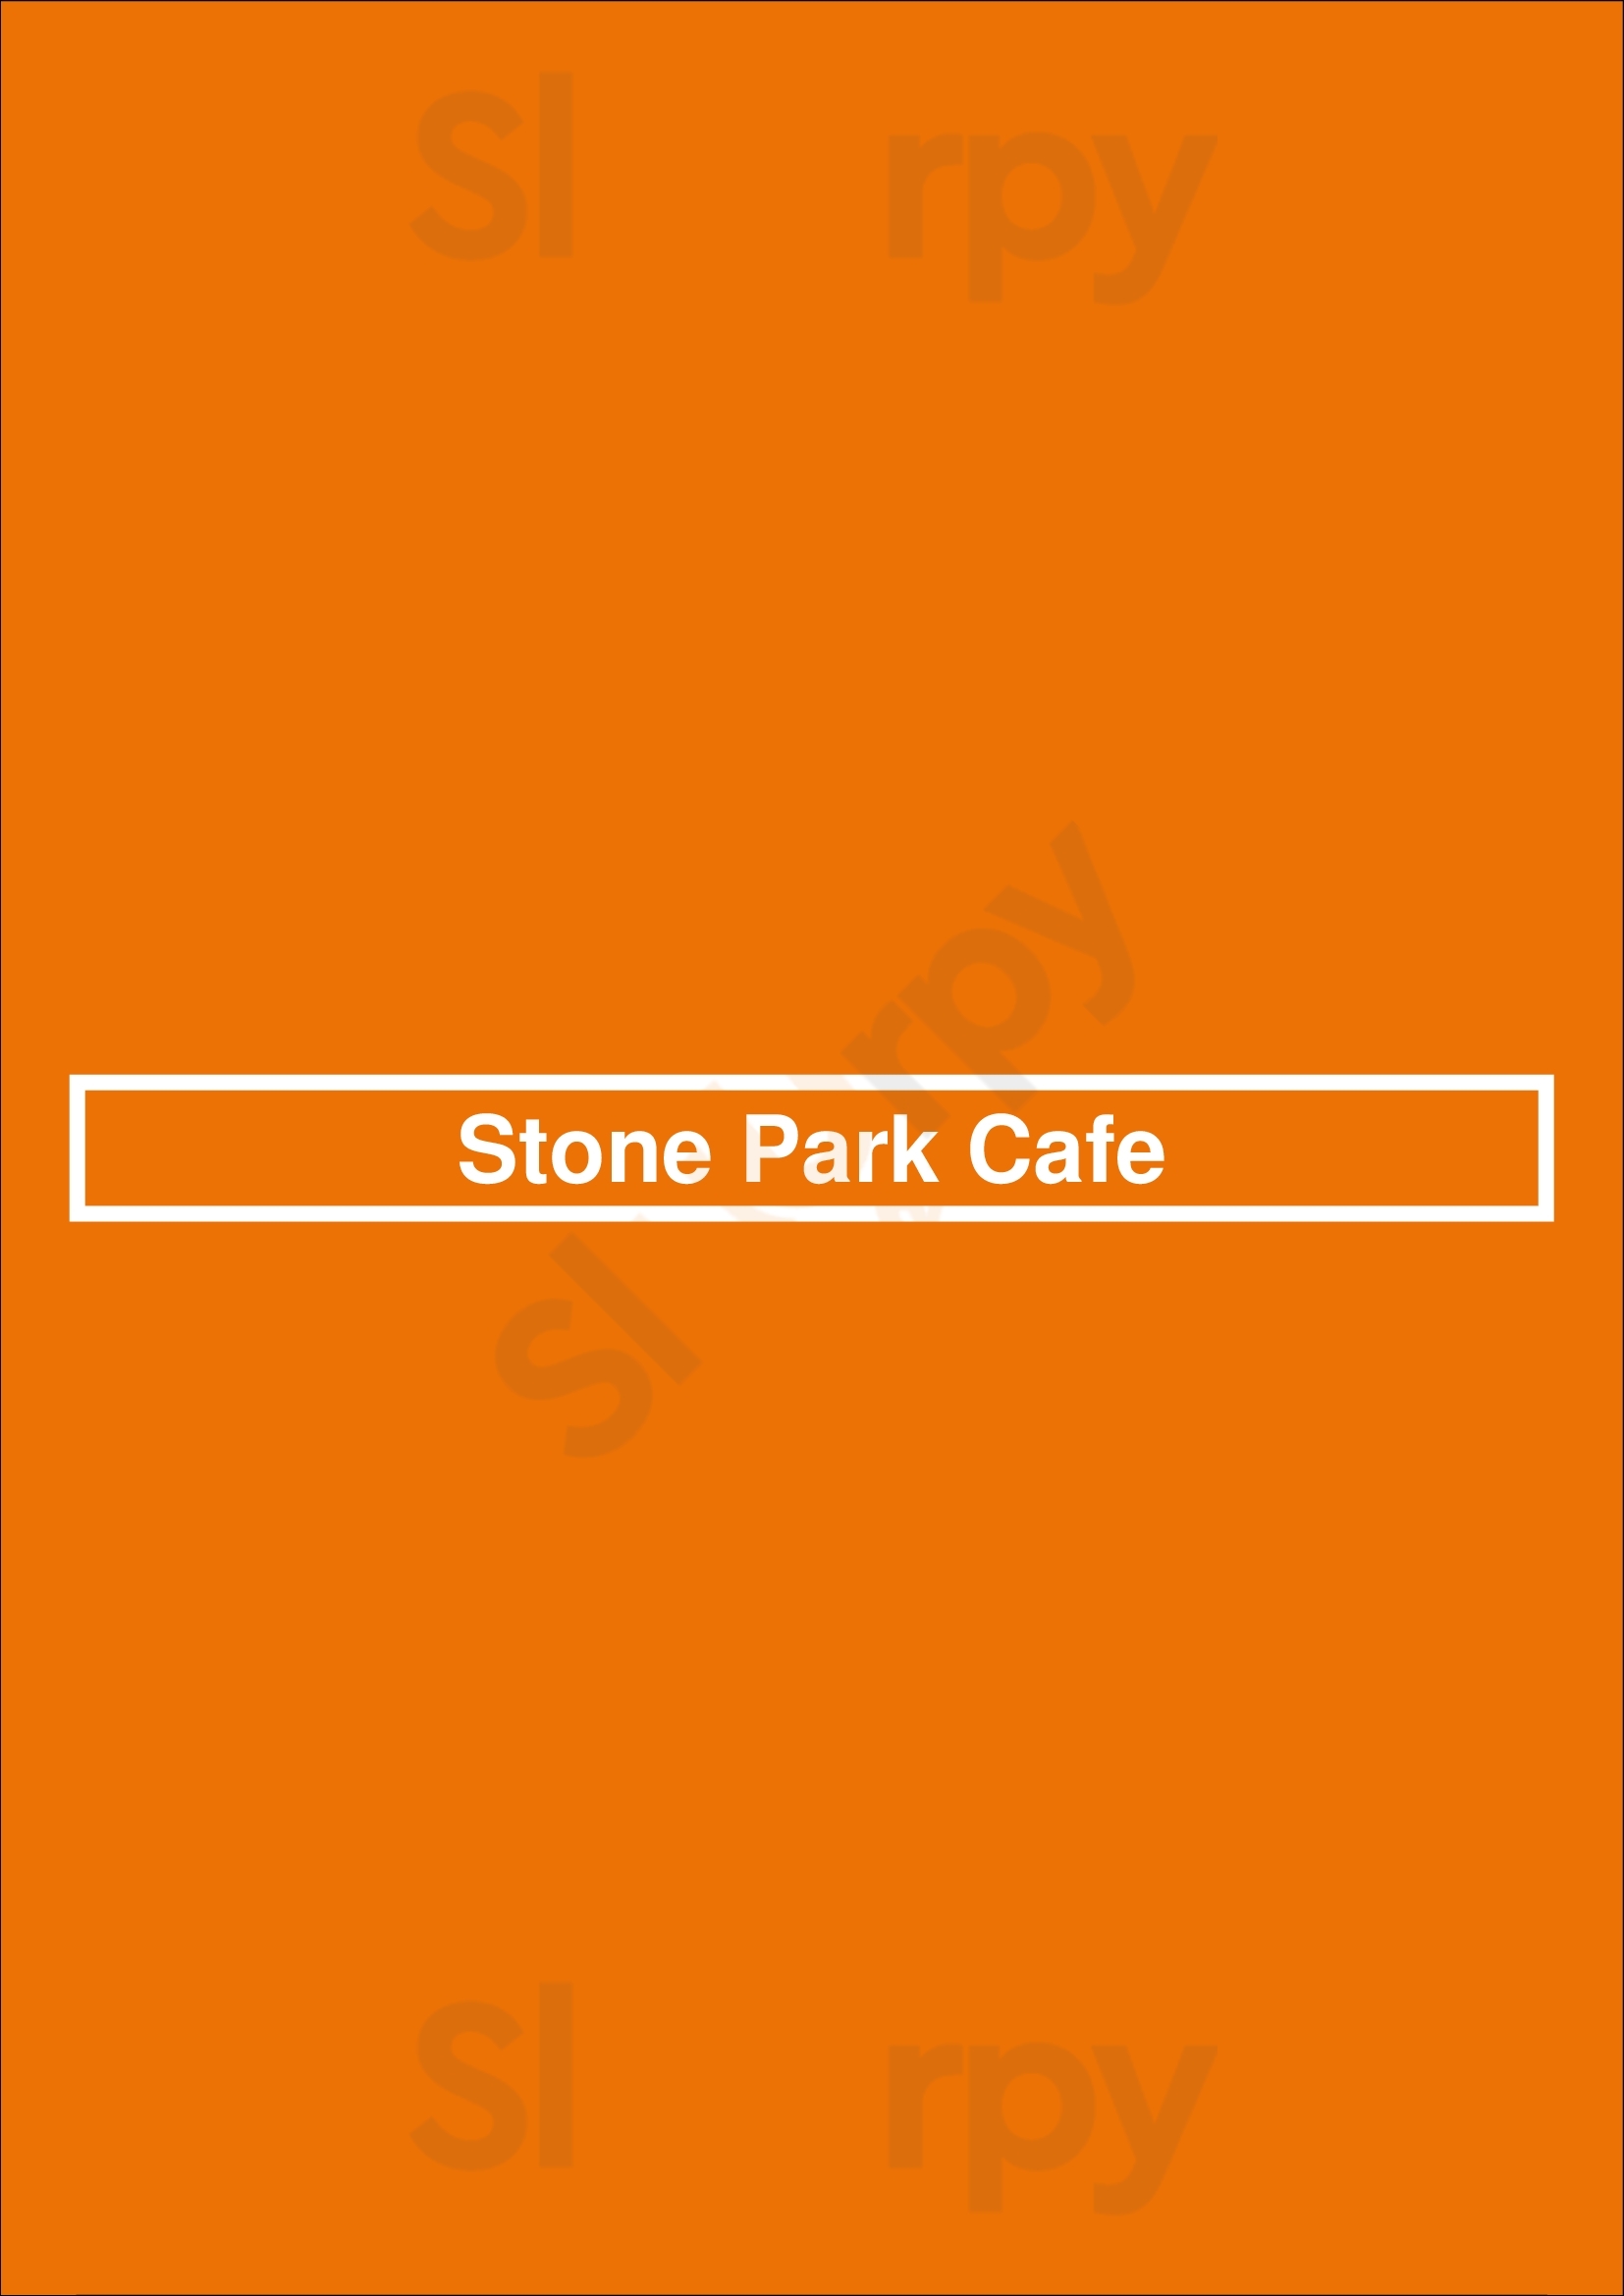 Stone Park Cafe Brooklyn Menu - 1